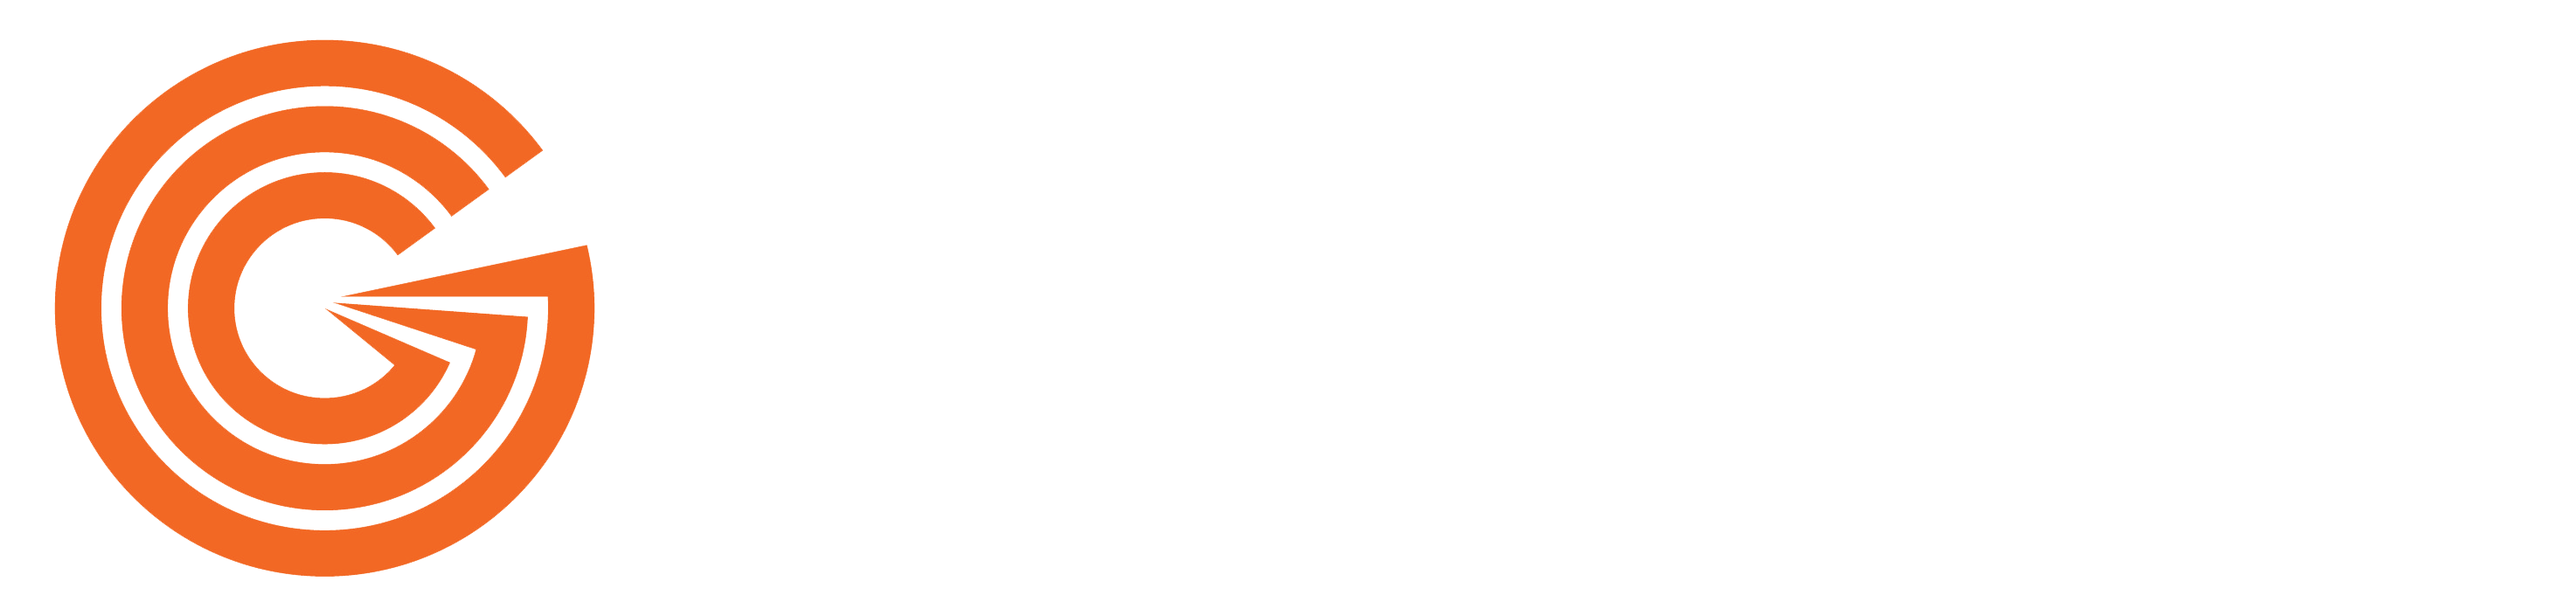 Gymaster